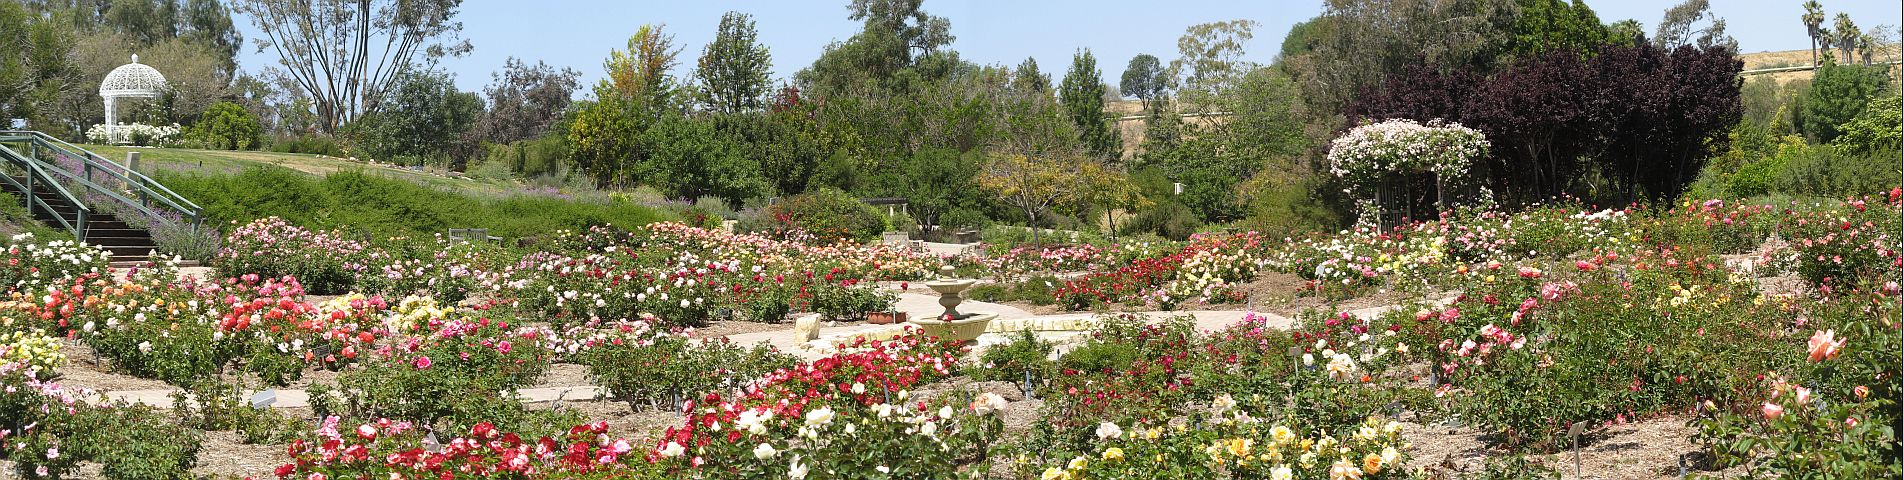 rose garden panorama